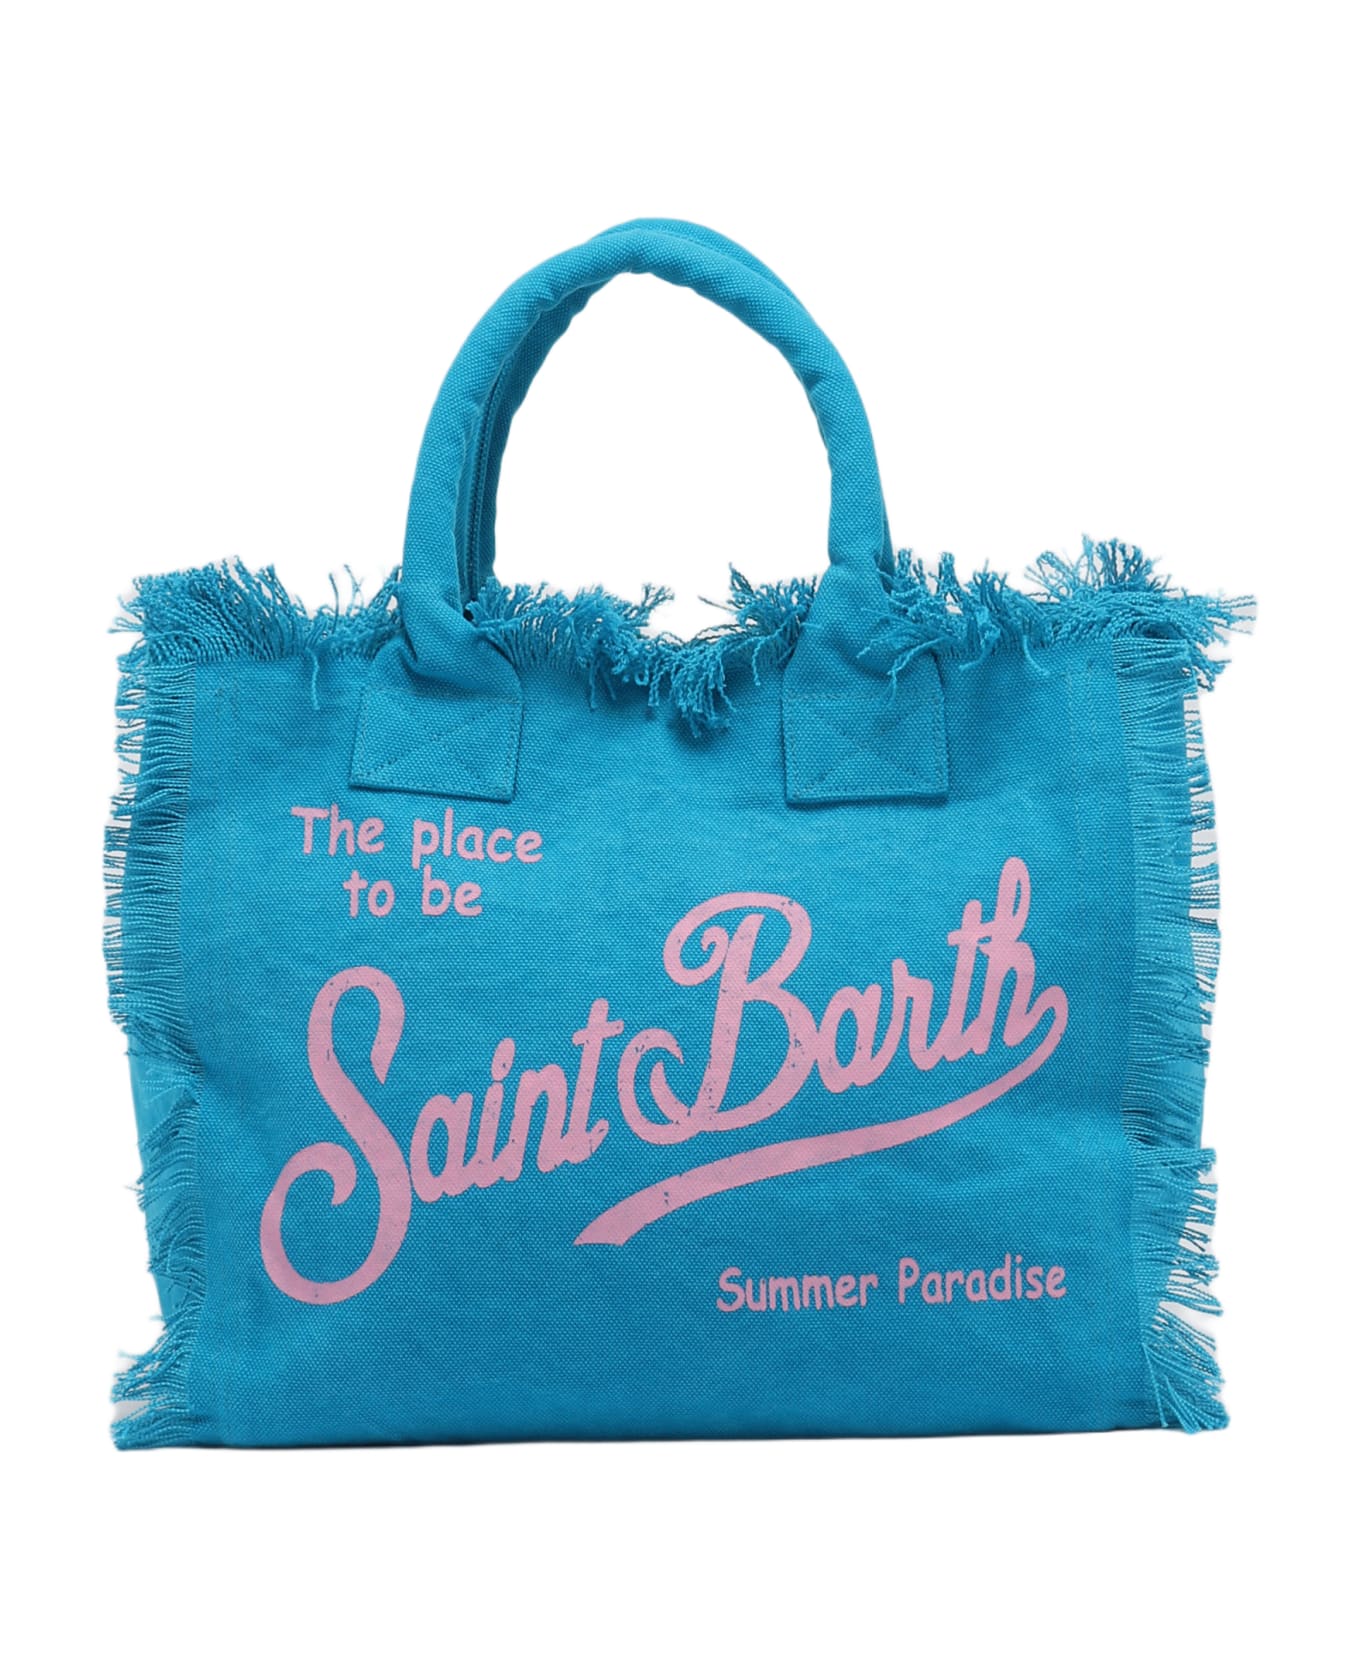 MC2 Saint Barth Vanity Shoulder Bag - AZZURRO CHIARO